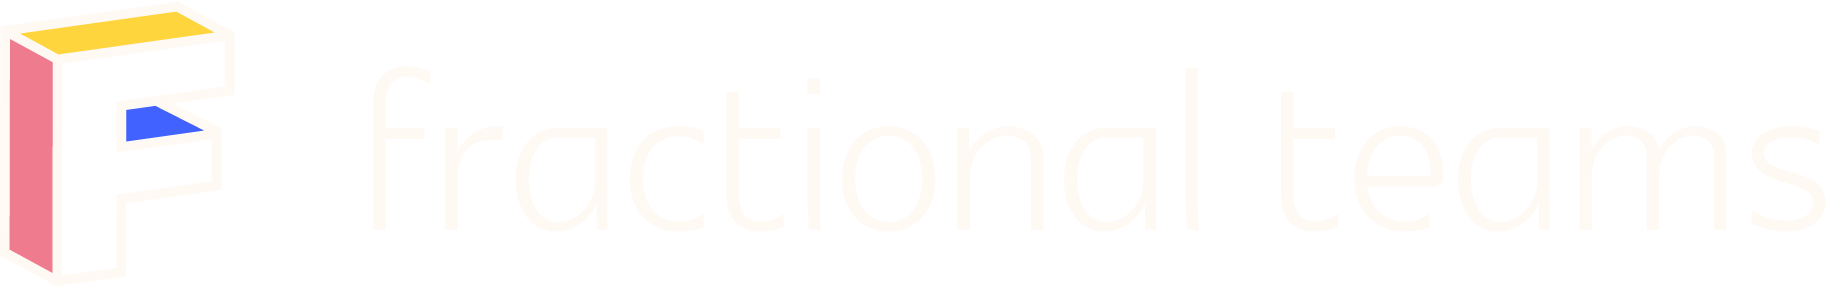 Fractional Teams white logo